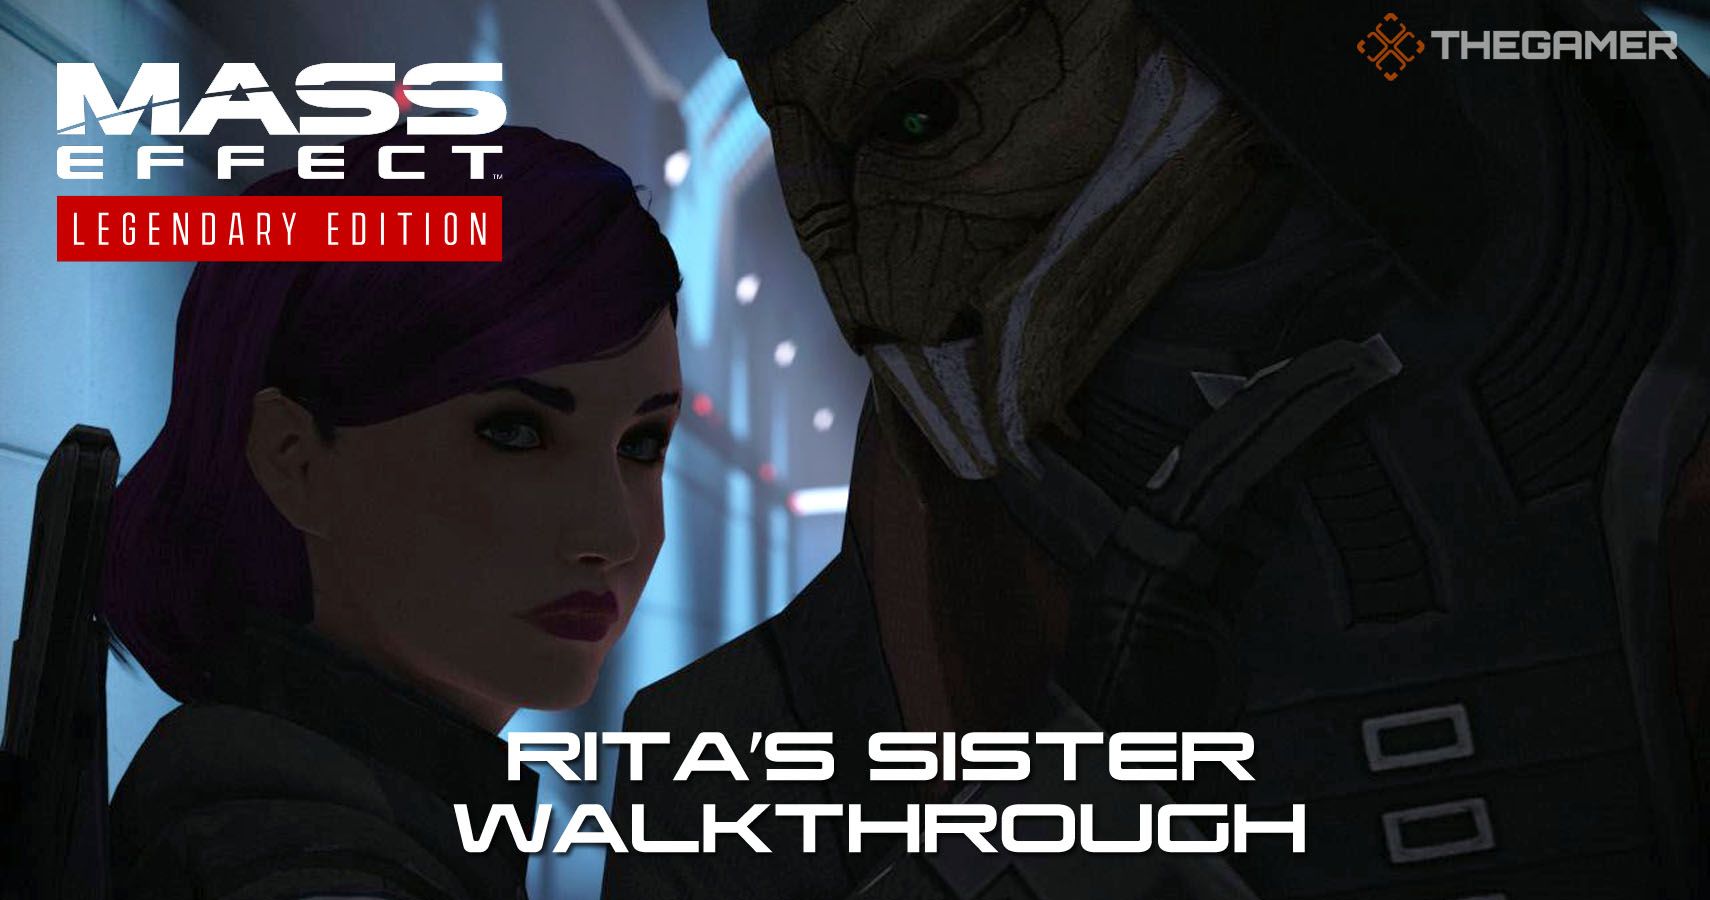 Mass Effect Ritas Sister Walkthrough